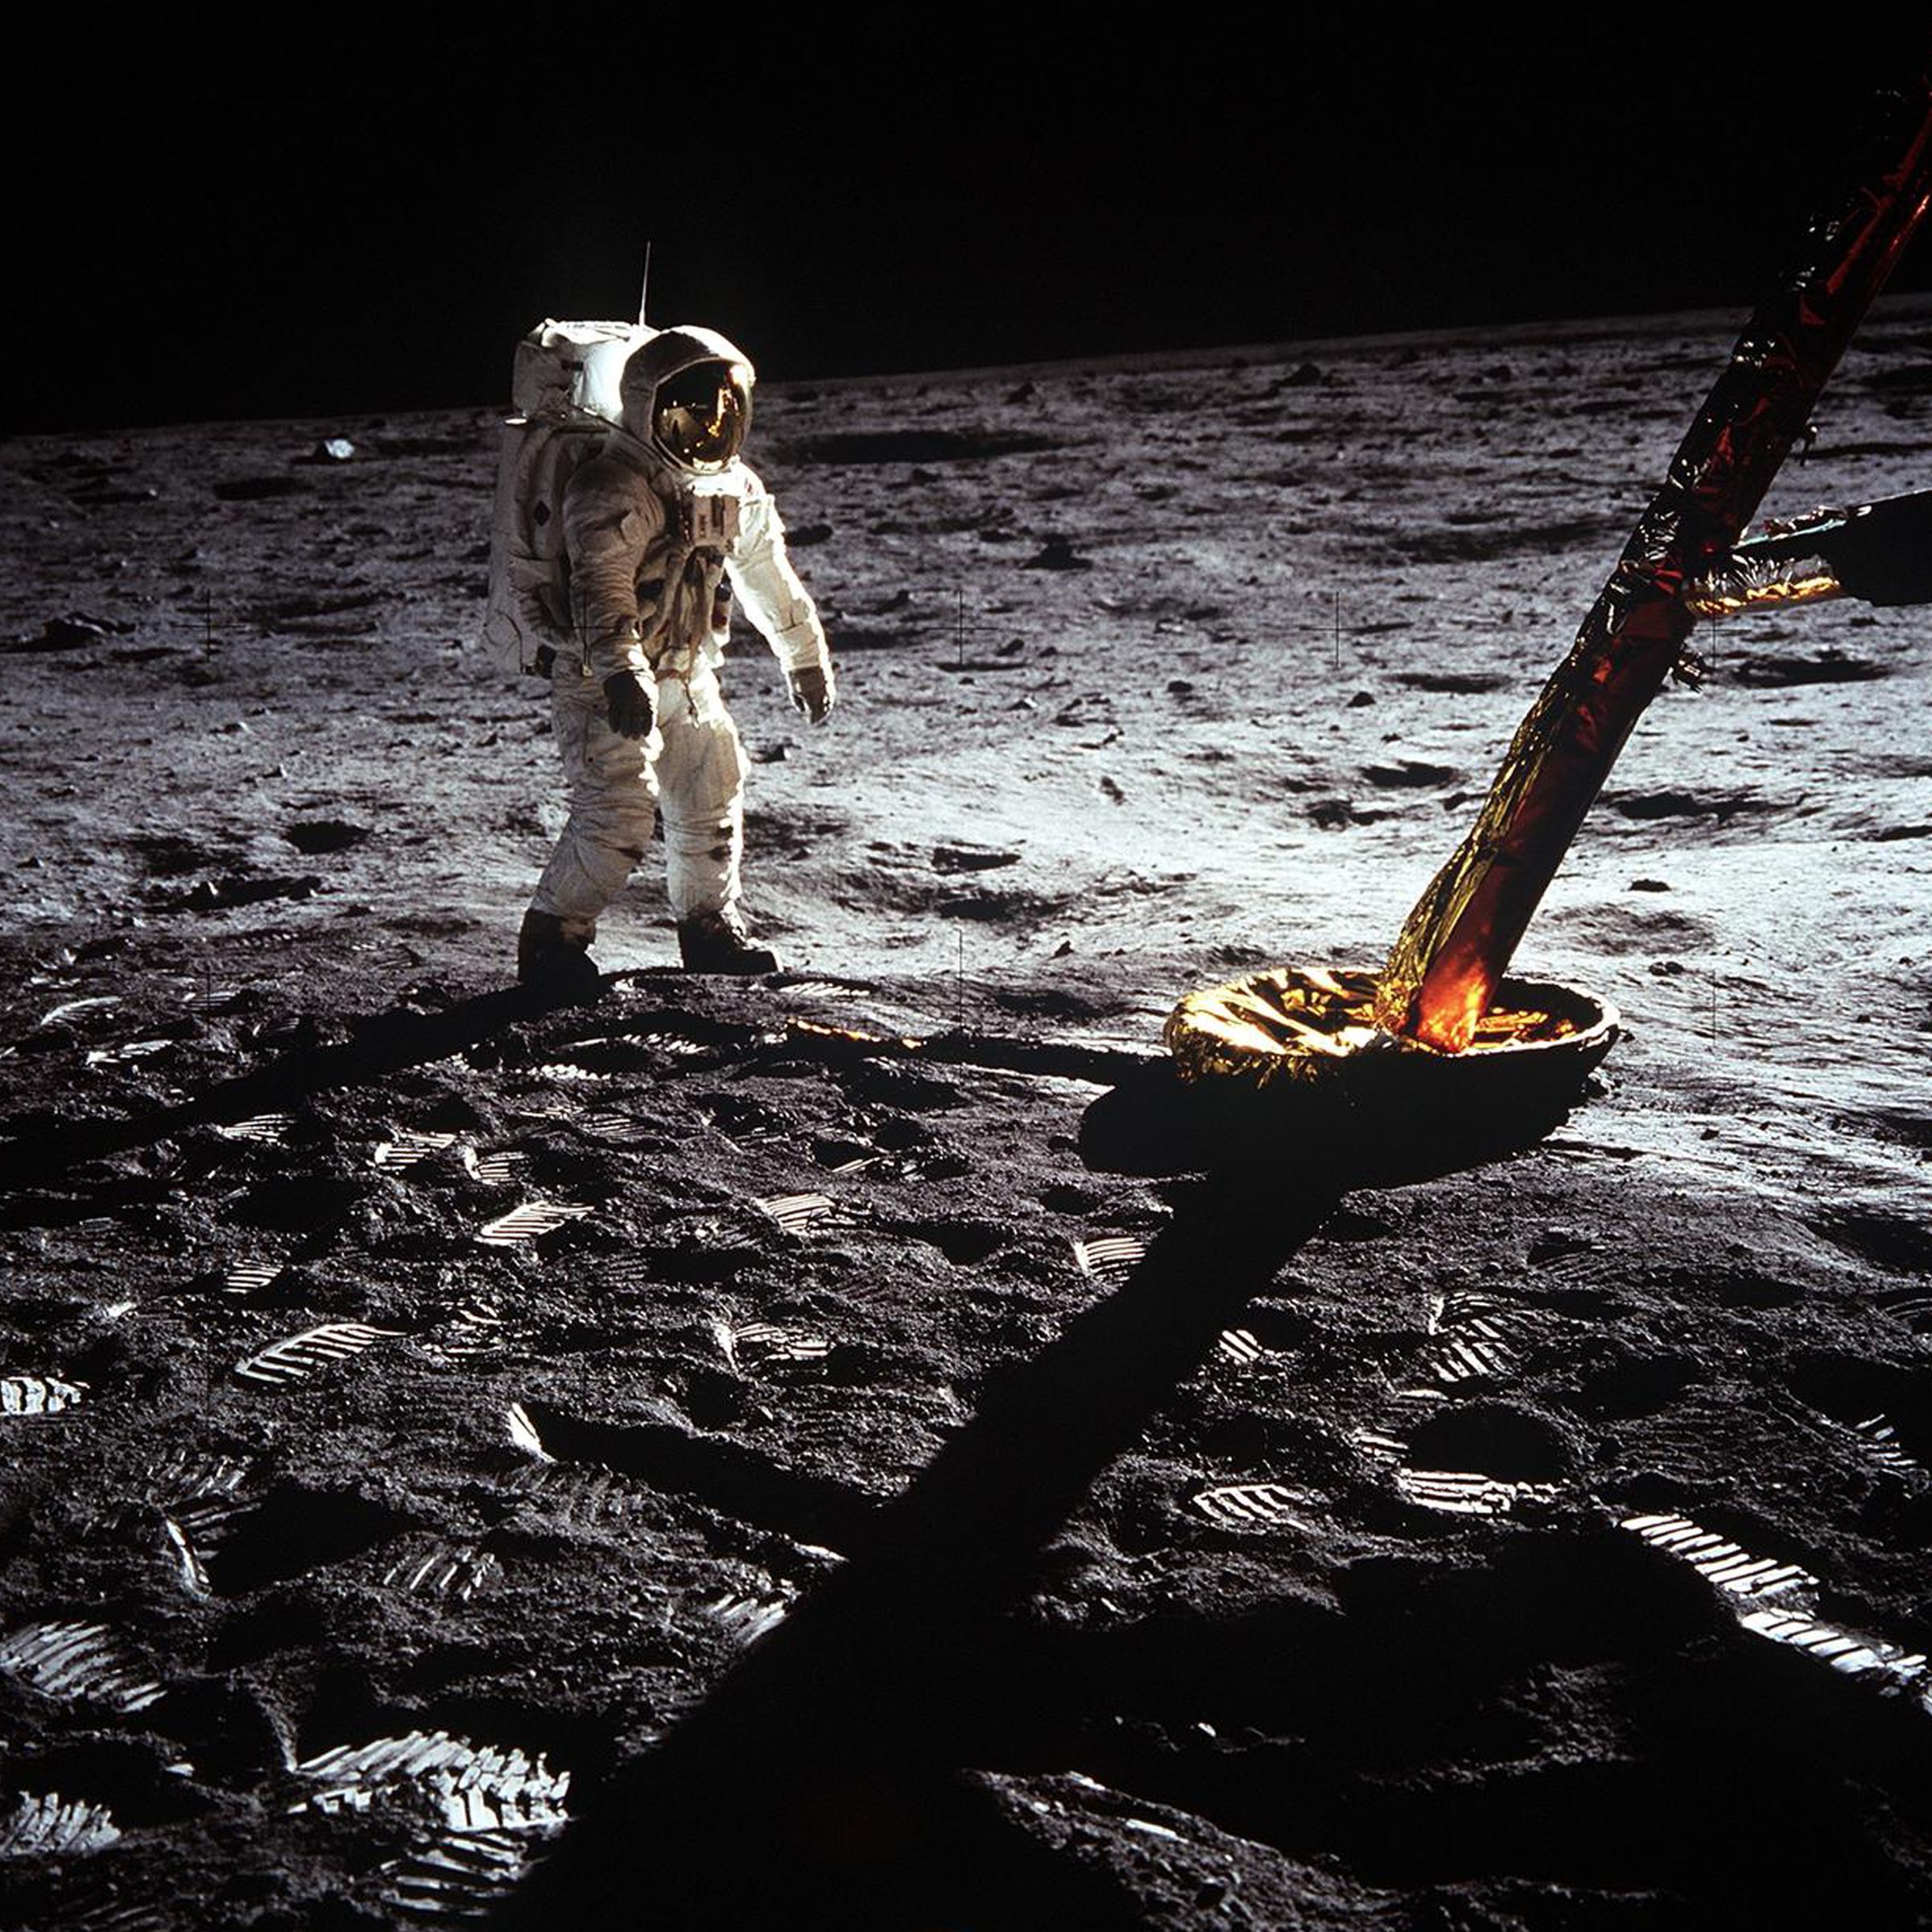 Astronaut on the moon next to Apollo 11 lunar lander